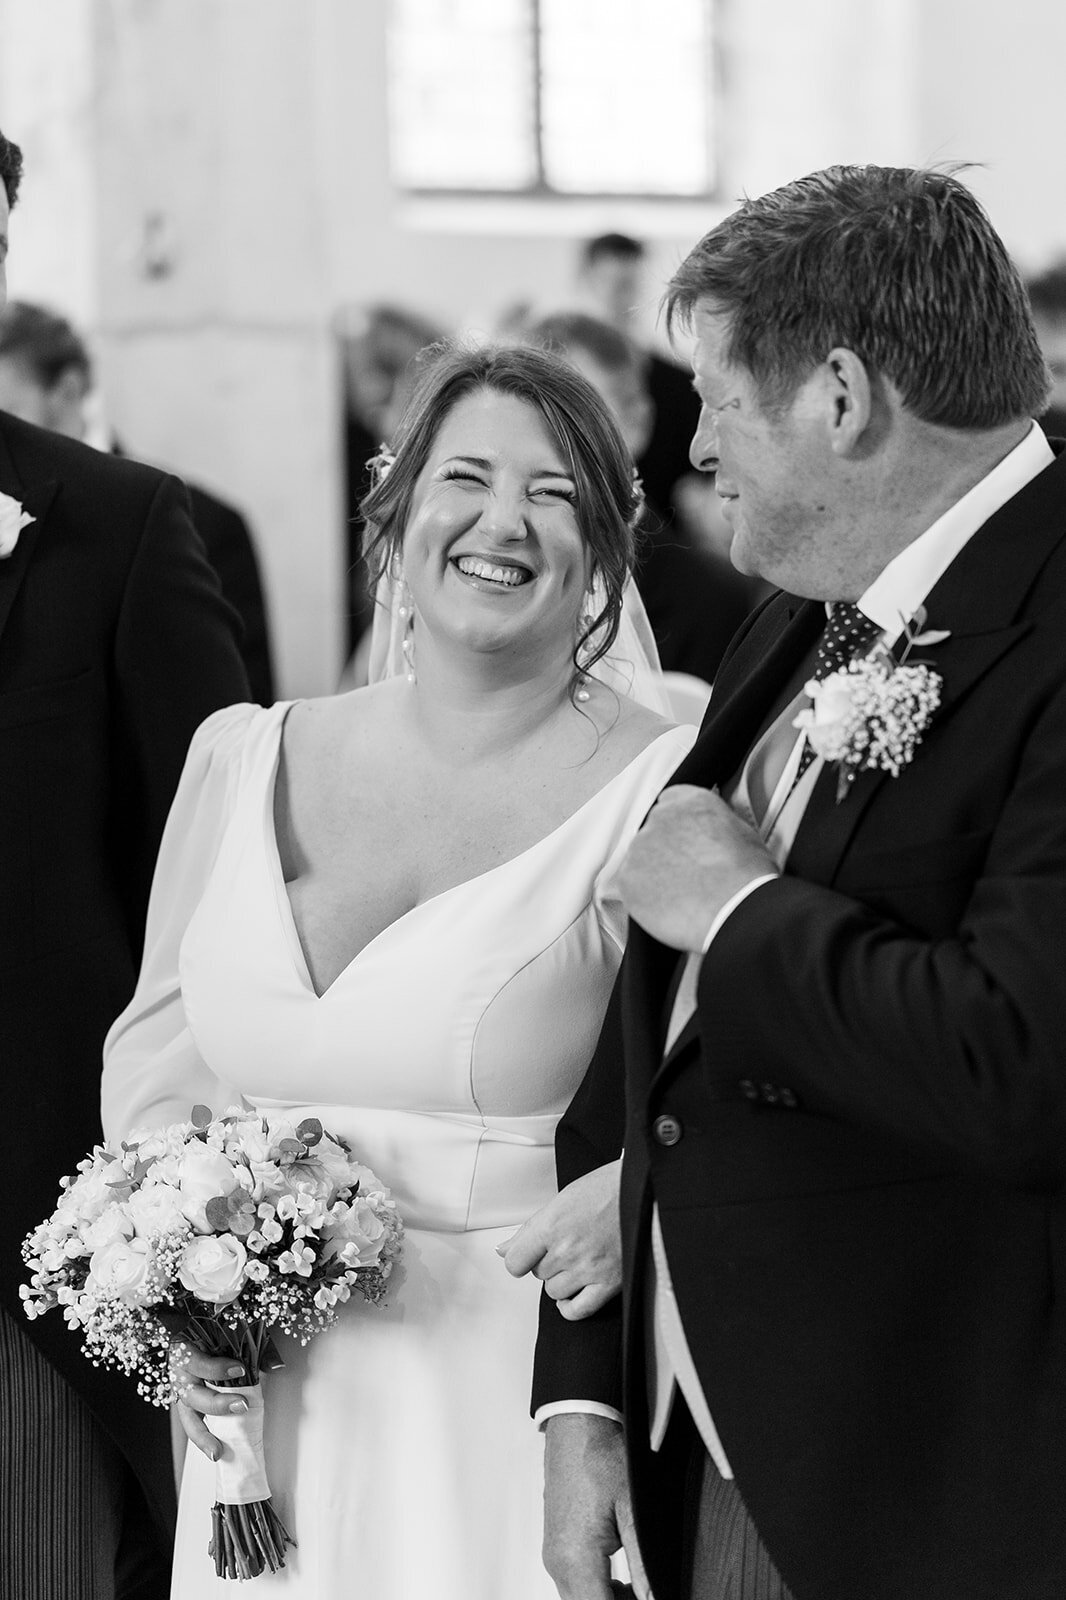 suffolk-wedding-photographer-marqueewedding2-39